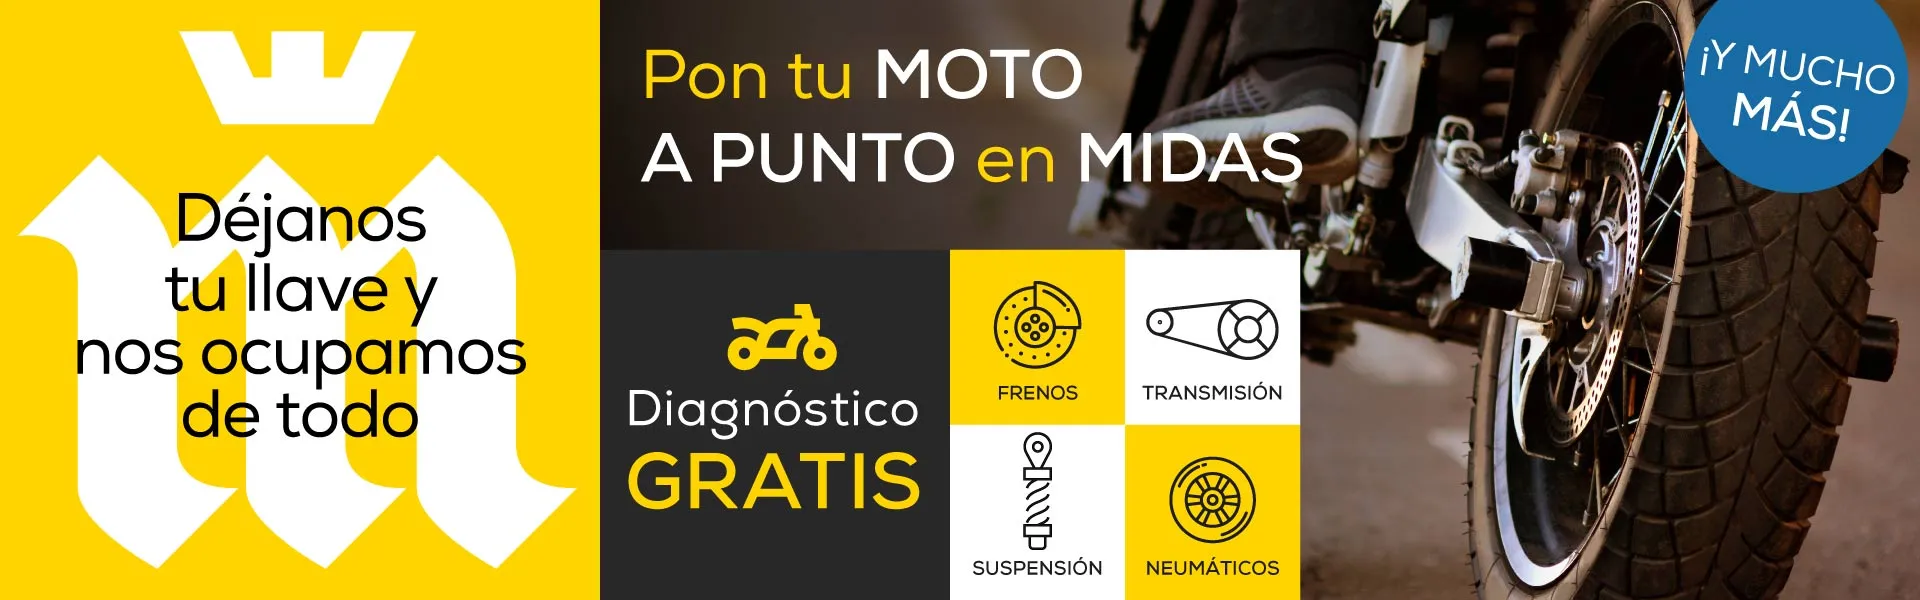 moto_diagnostico-gratuito_web_midas